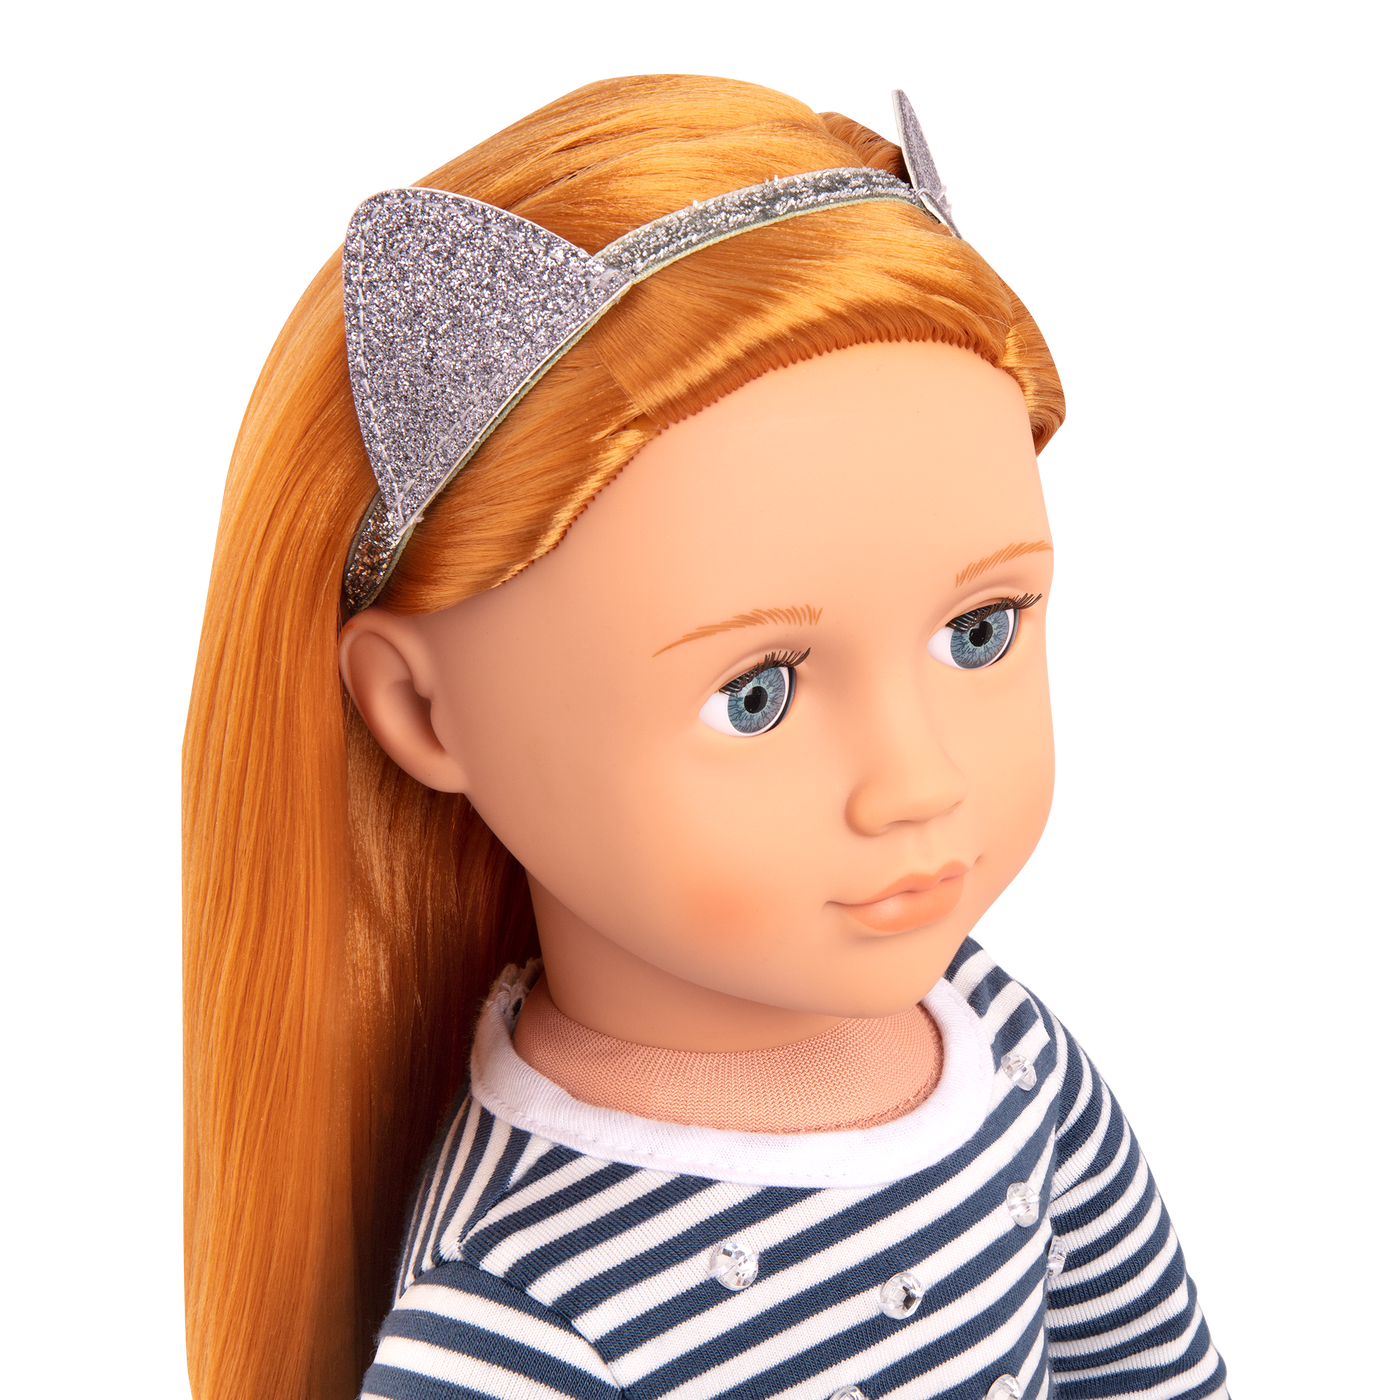 Arlee 18-inch Doll